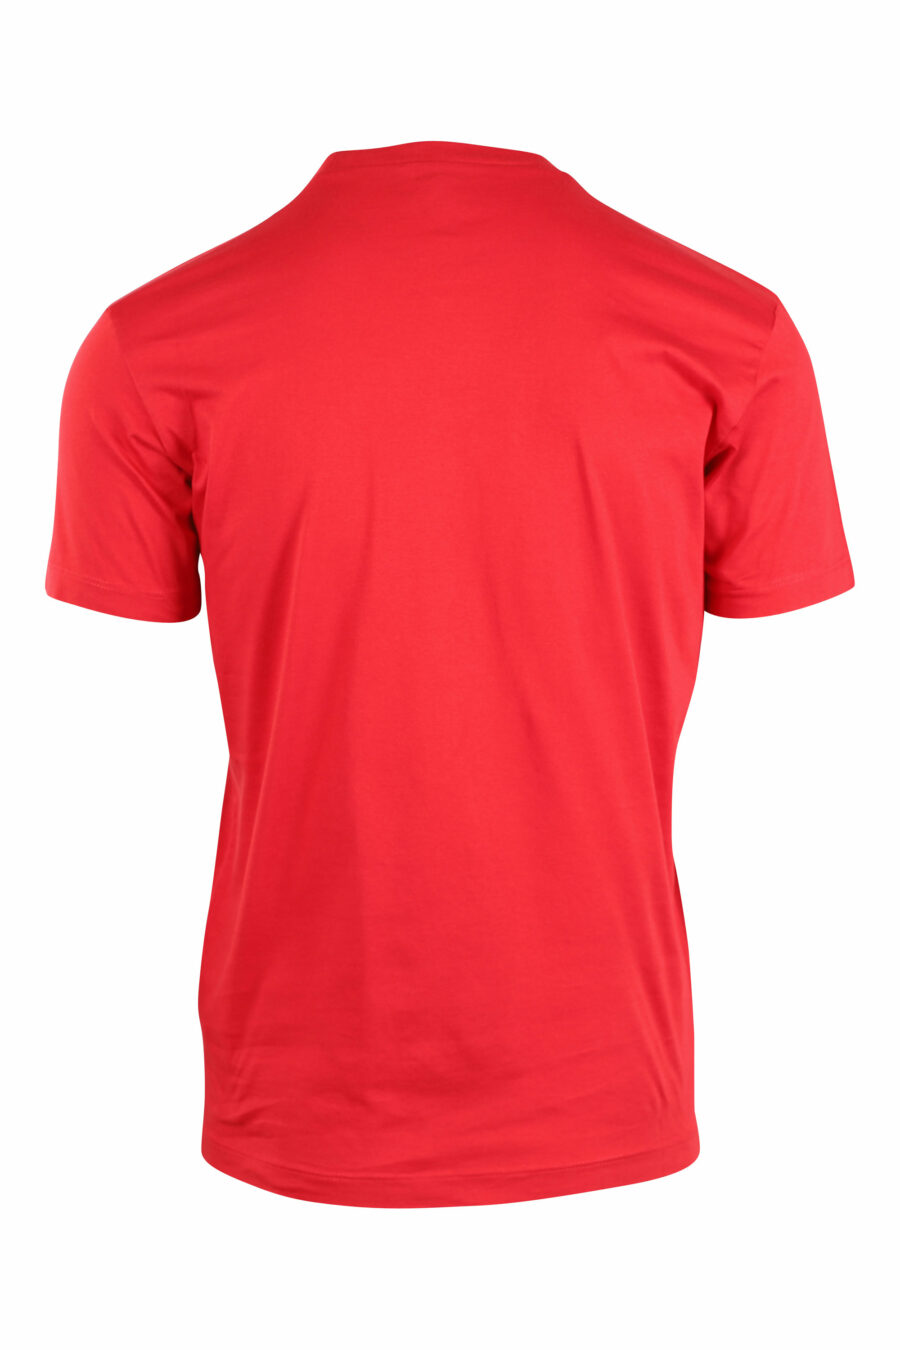 Camiseta roja con maxilogo y hoja - IMG 2642